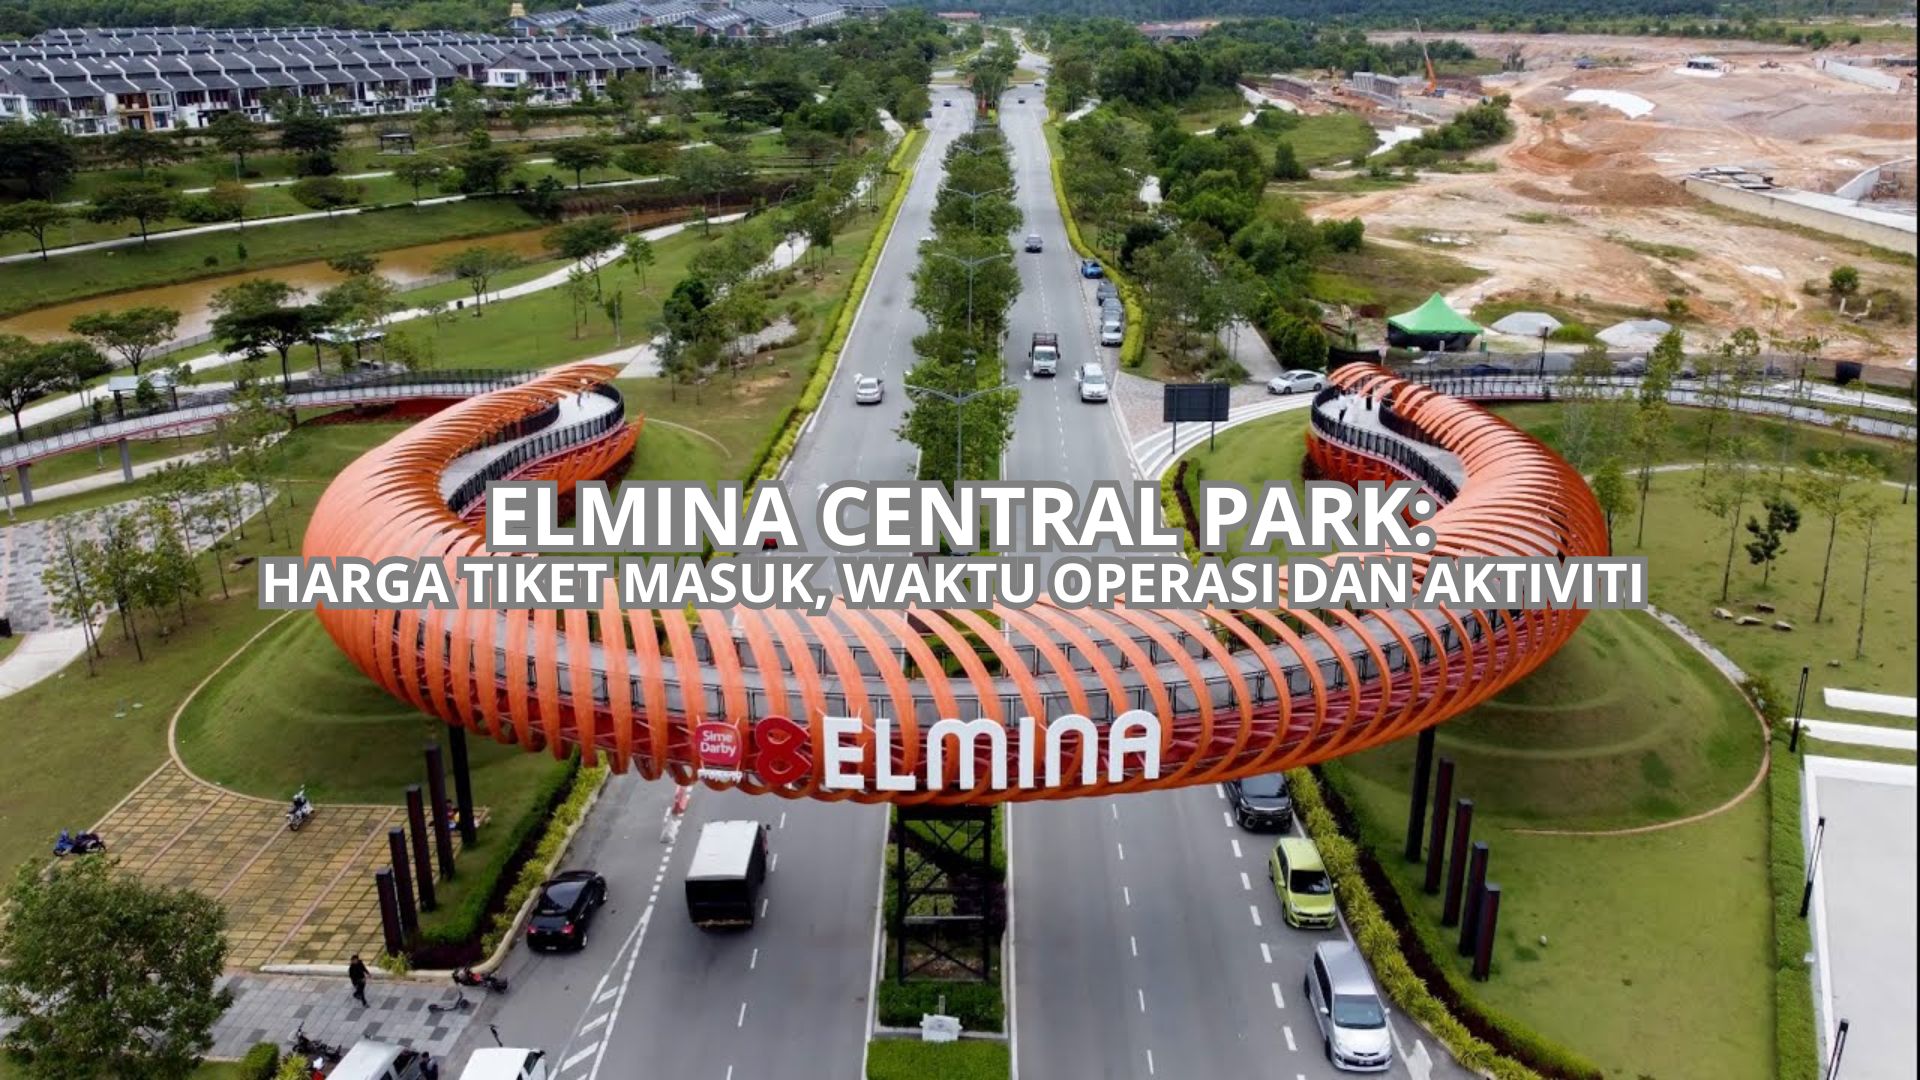 Elmina Central Park Cover